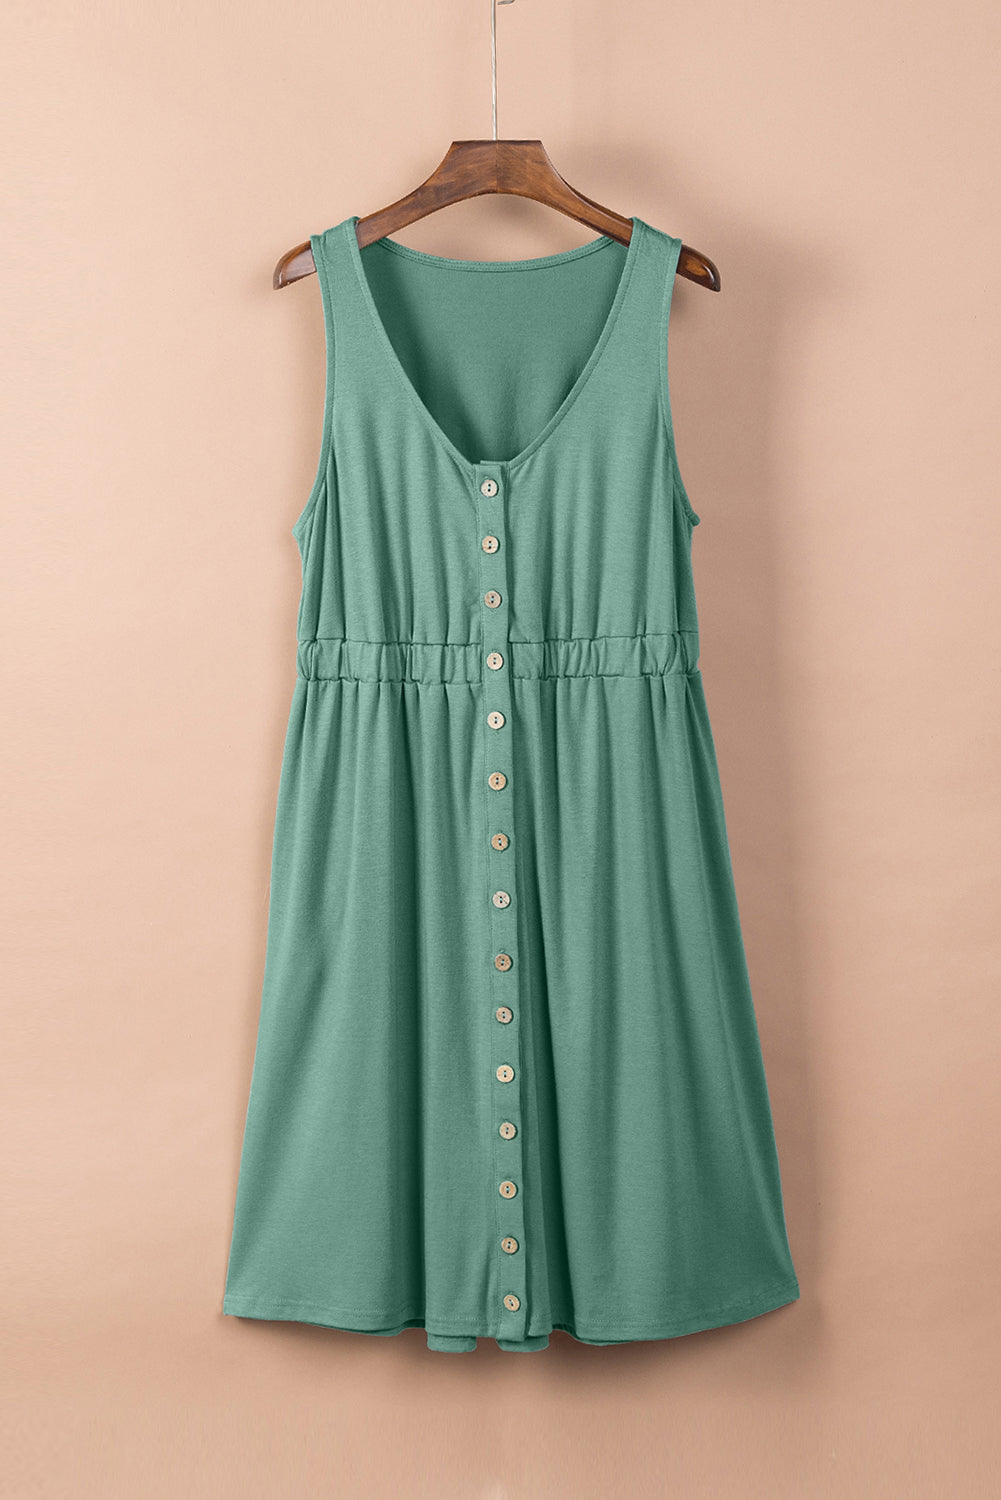 Sleeveless Button Down Dress - 12 colors